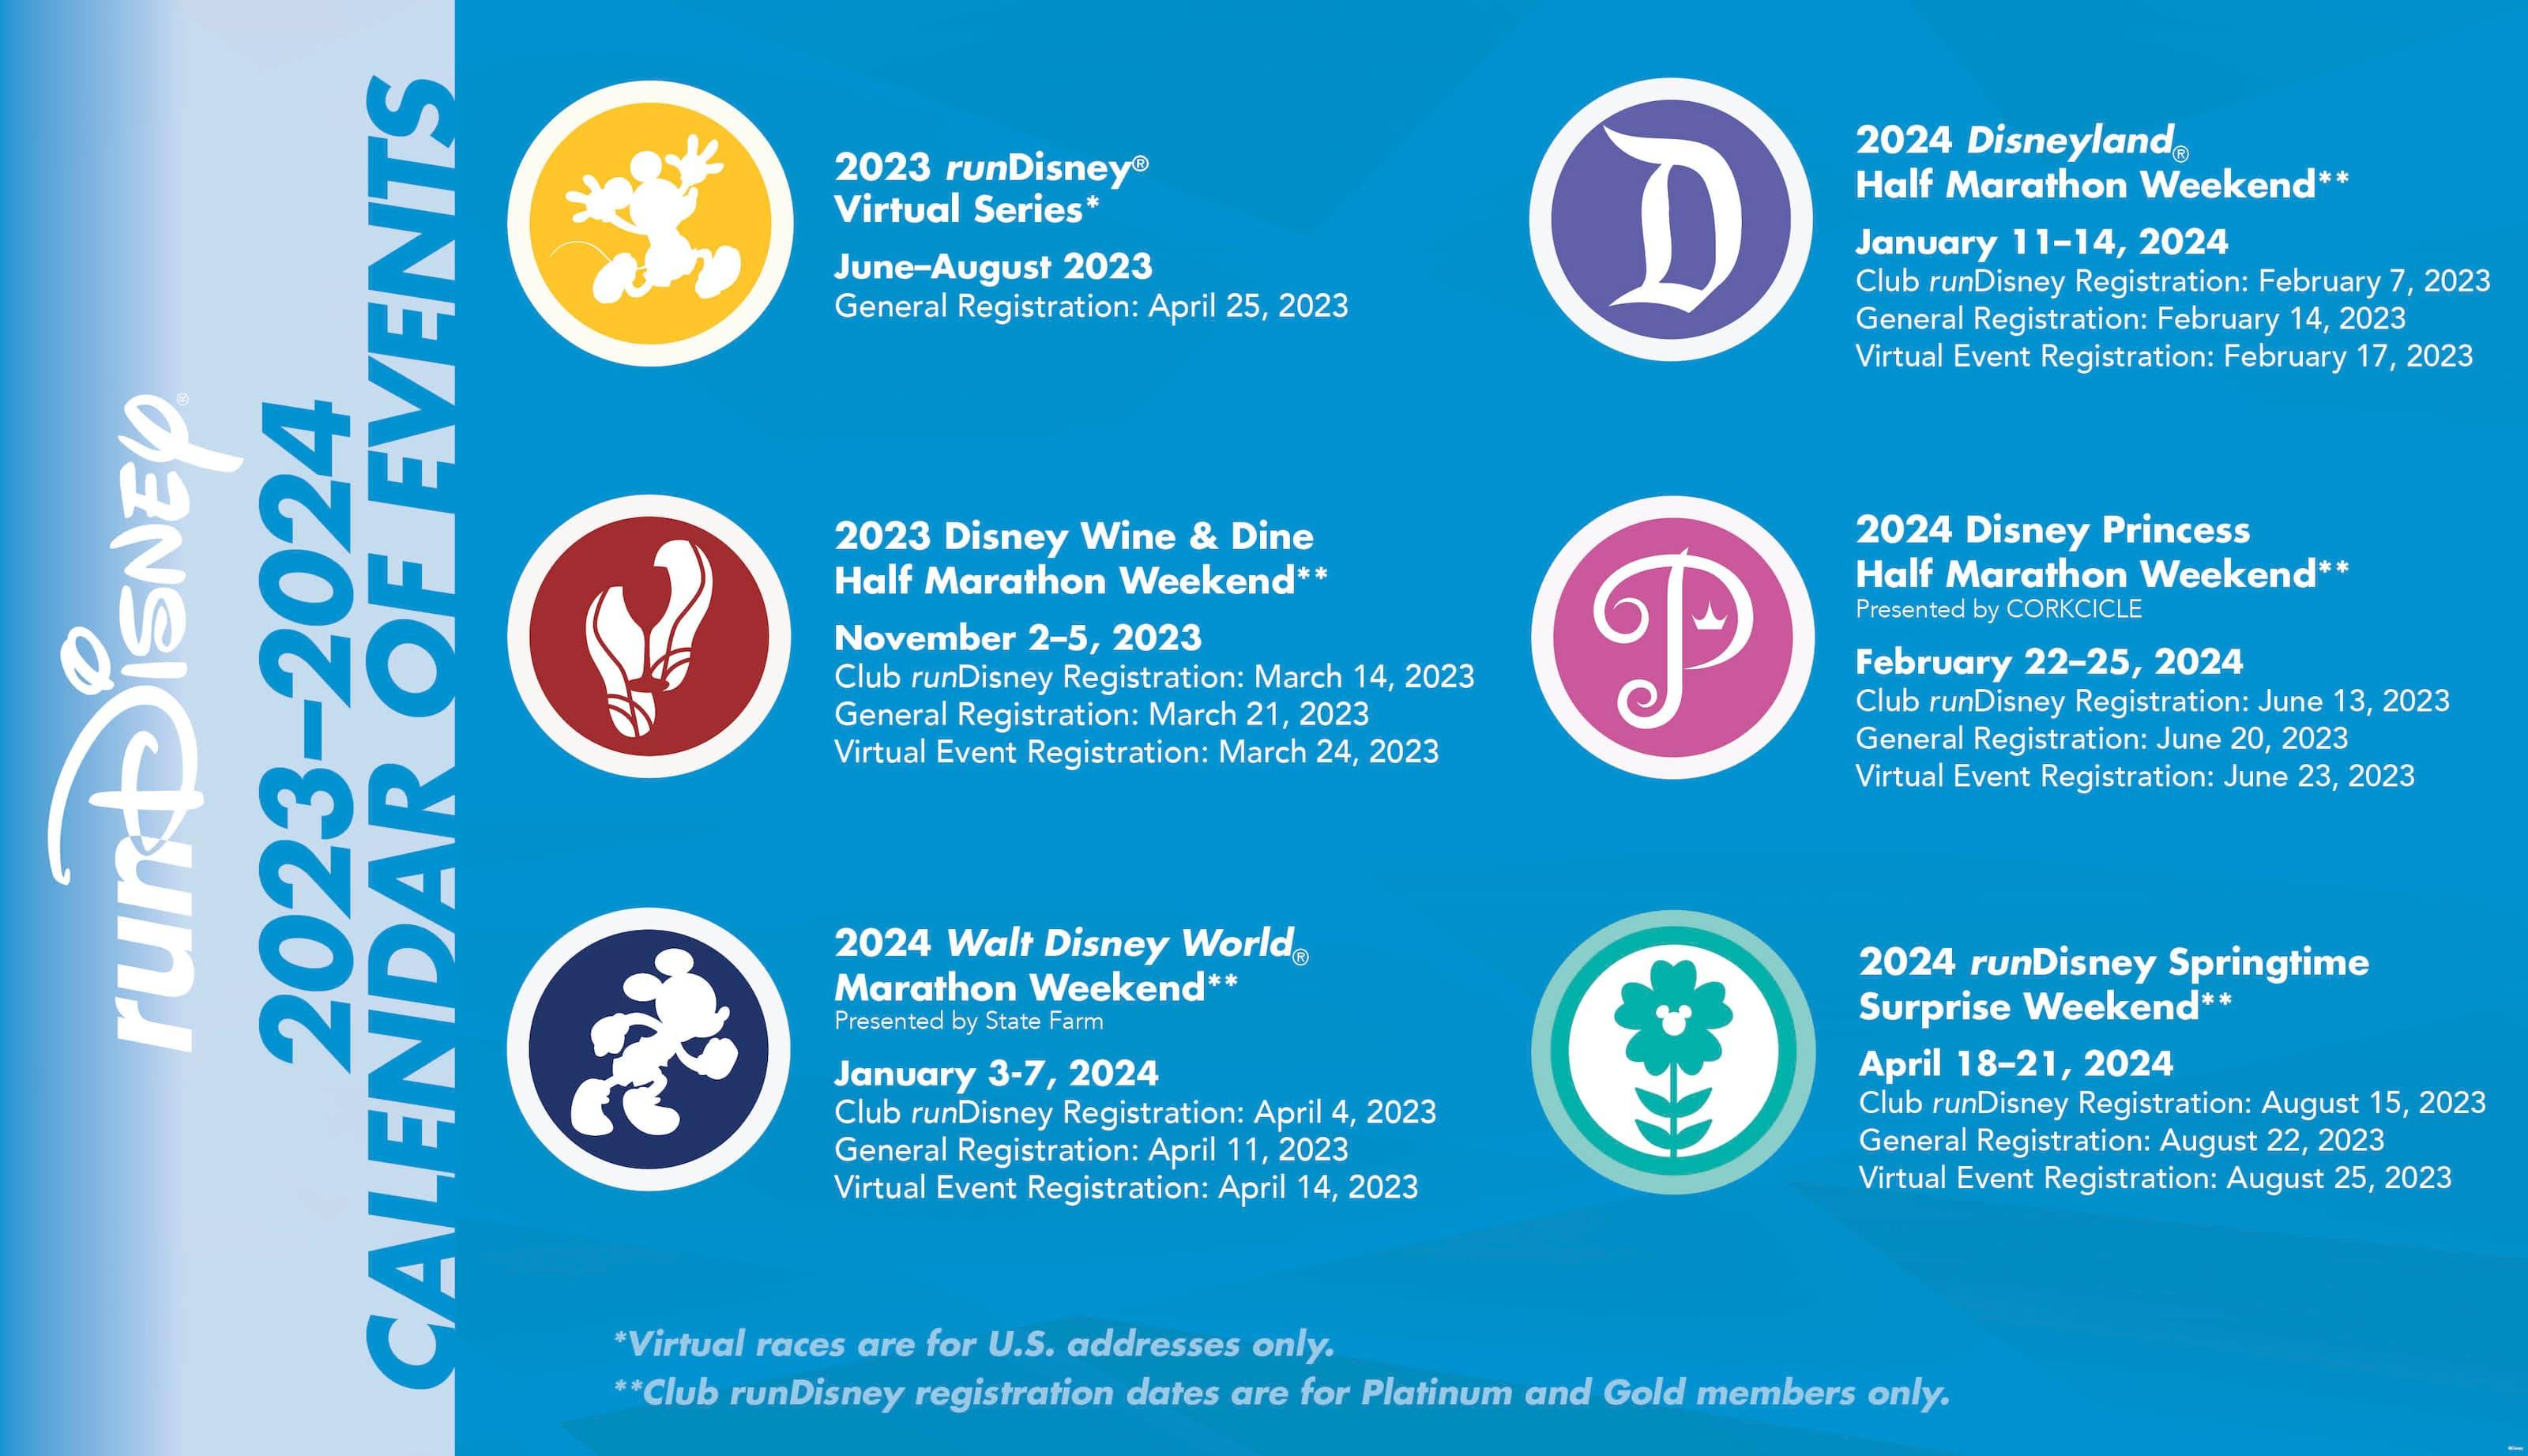 runDisney Race Season dates for 2023 - 2024 including the return of the Disneyland Half Marathon